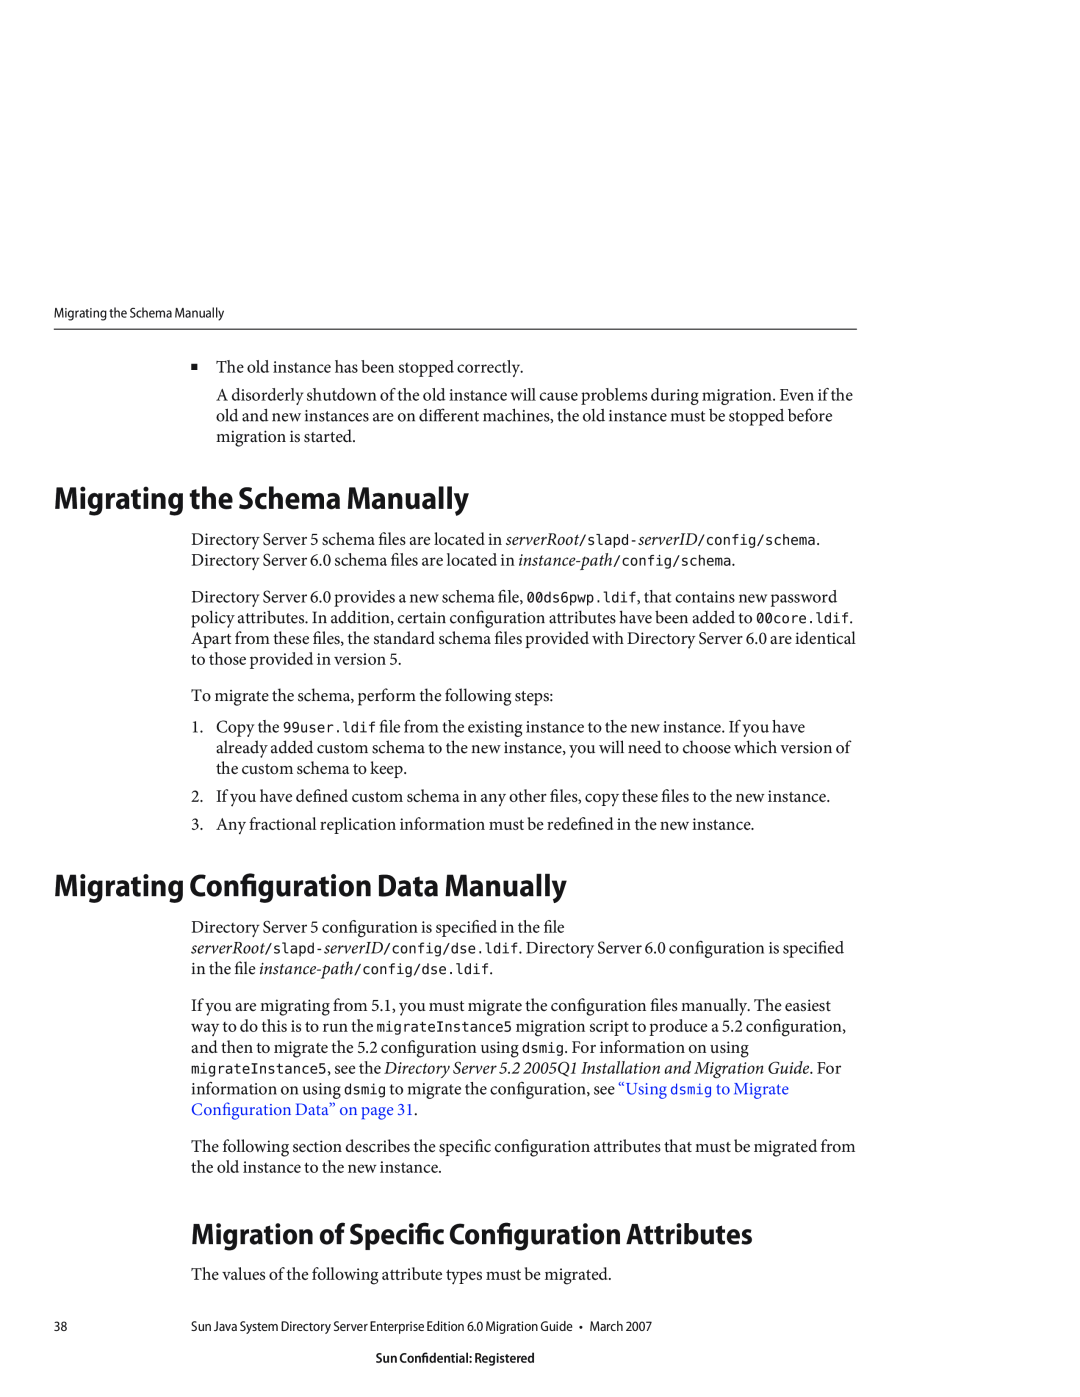 Sun Microsystems 8190994 manual Migrating the Schema Manually, Migrating Configuration Data Manually 